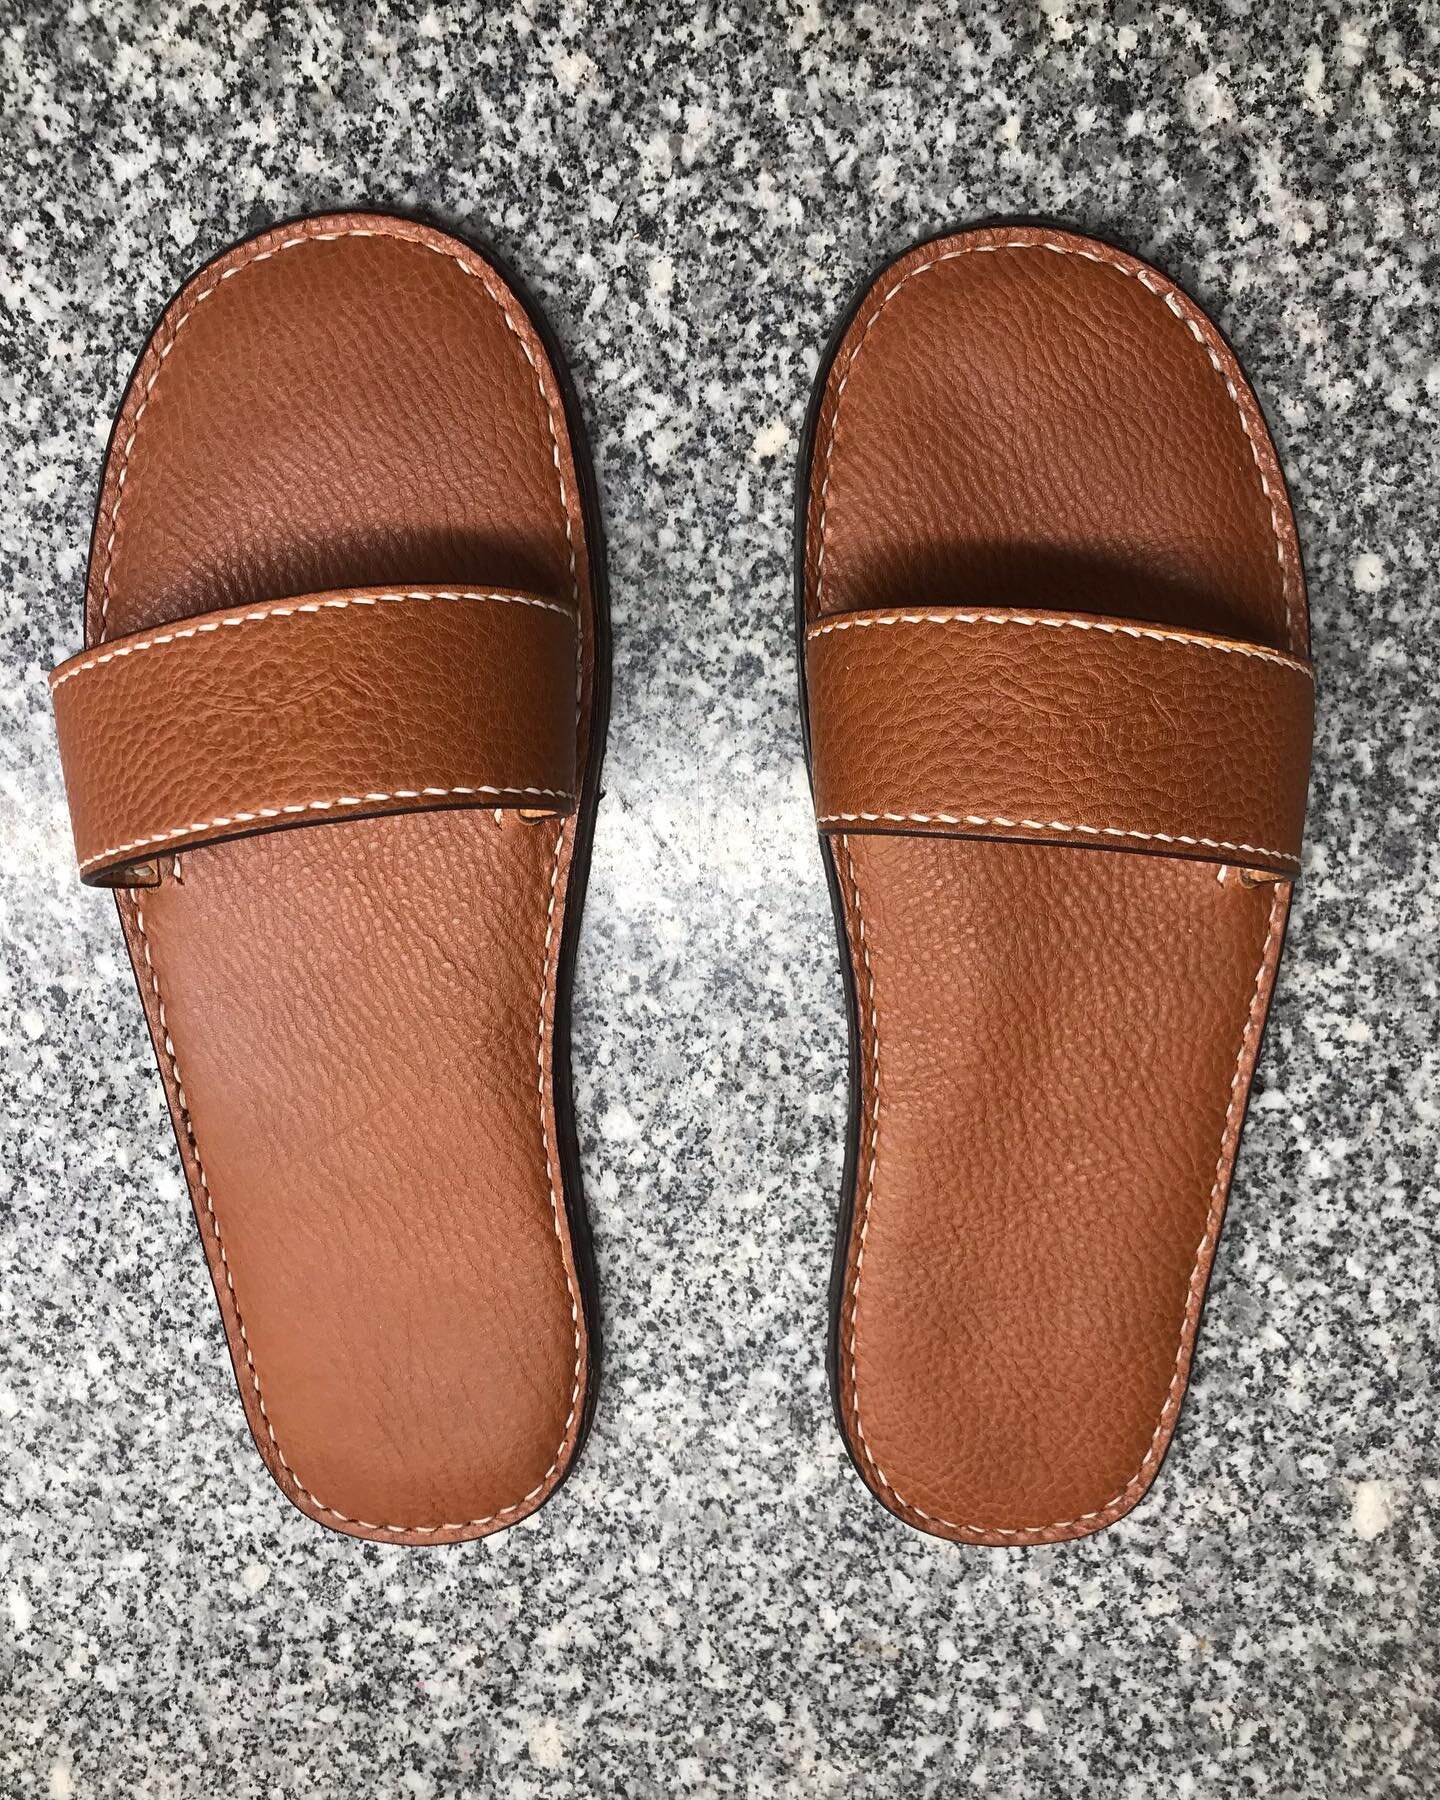 Sandals. Sewn through the sole for maximum sustainability. 

#sandals #sandales #shoes #shoesaddict #chaussures #leather #leathercraft #leatherworks #cuir #faitmain #handsewn #cousumain #lesanglier #vegtanleather #art #fashion #shopping #liege #li&eg